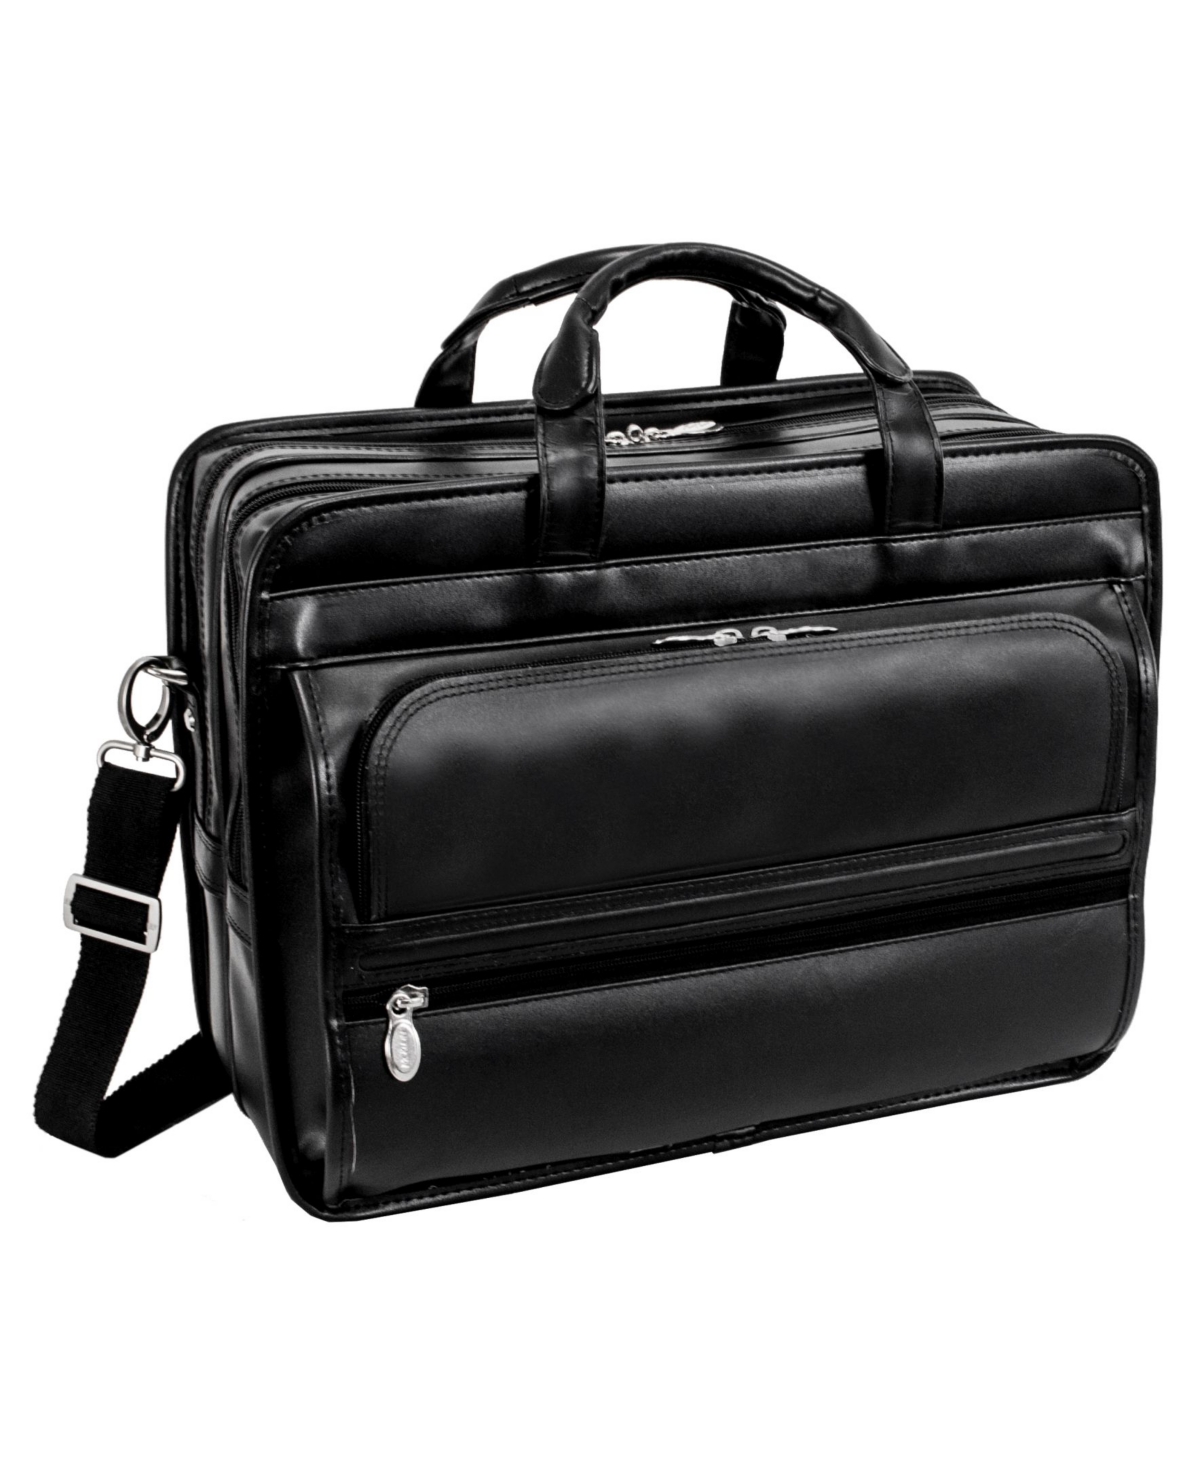 Elston Checkpoint-Friendly Double Compartment Laptop Briefcase - Black